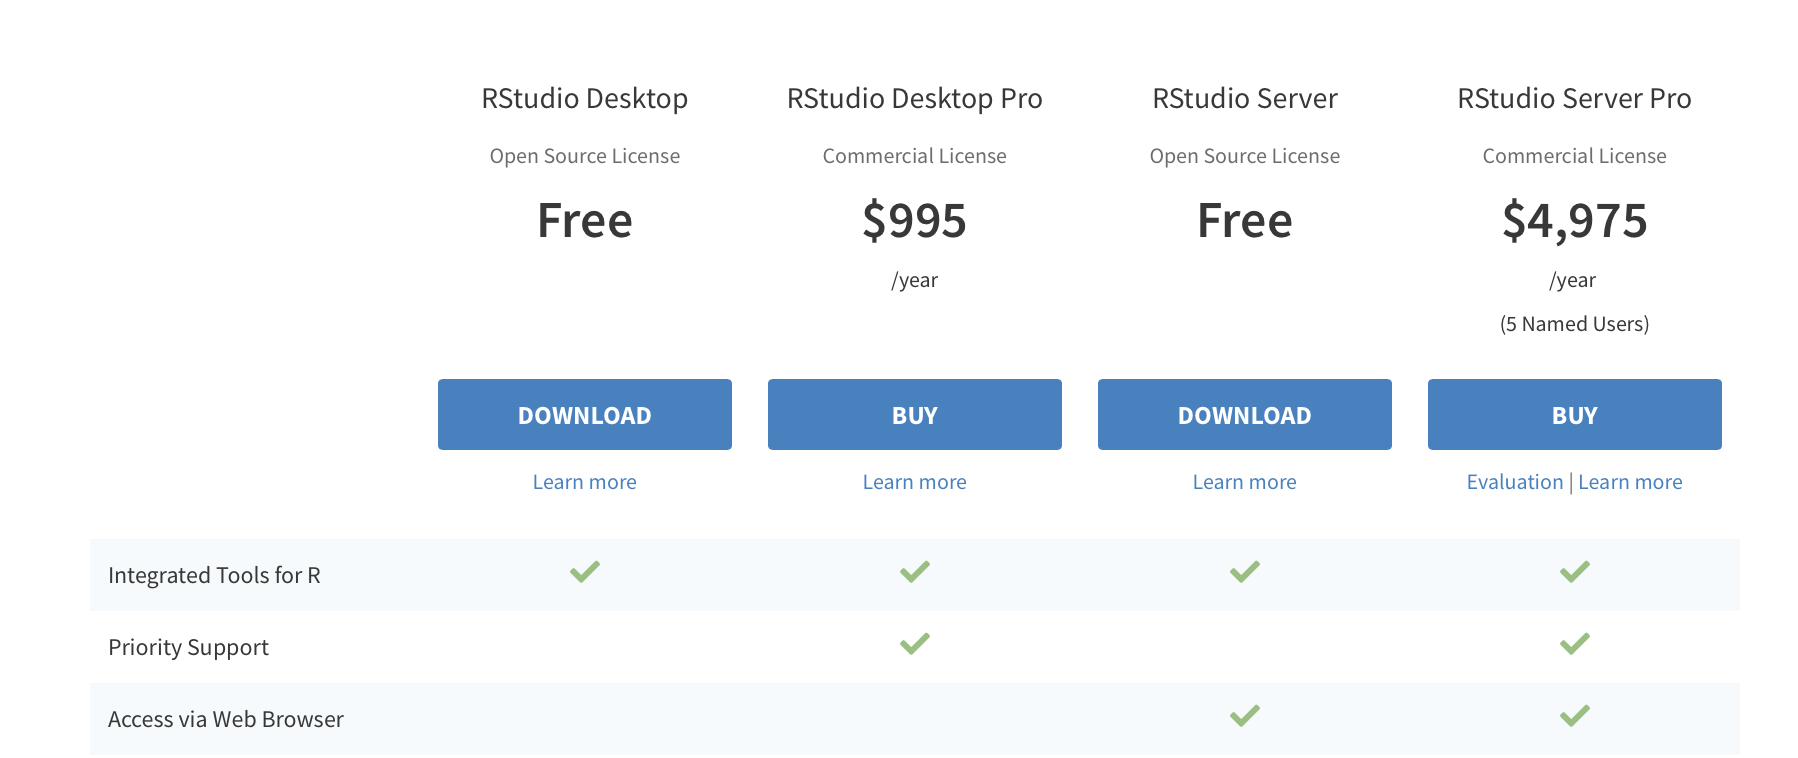 Select Download in the "RStudio Desktop Open Source License" column.